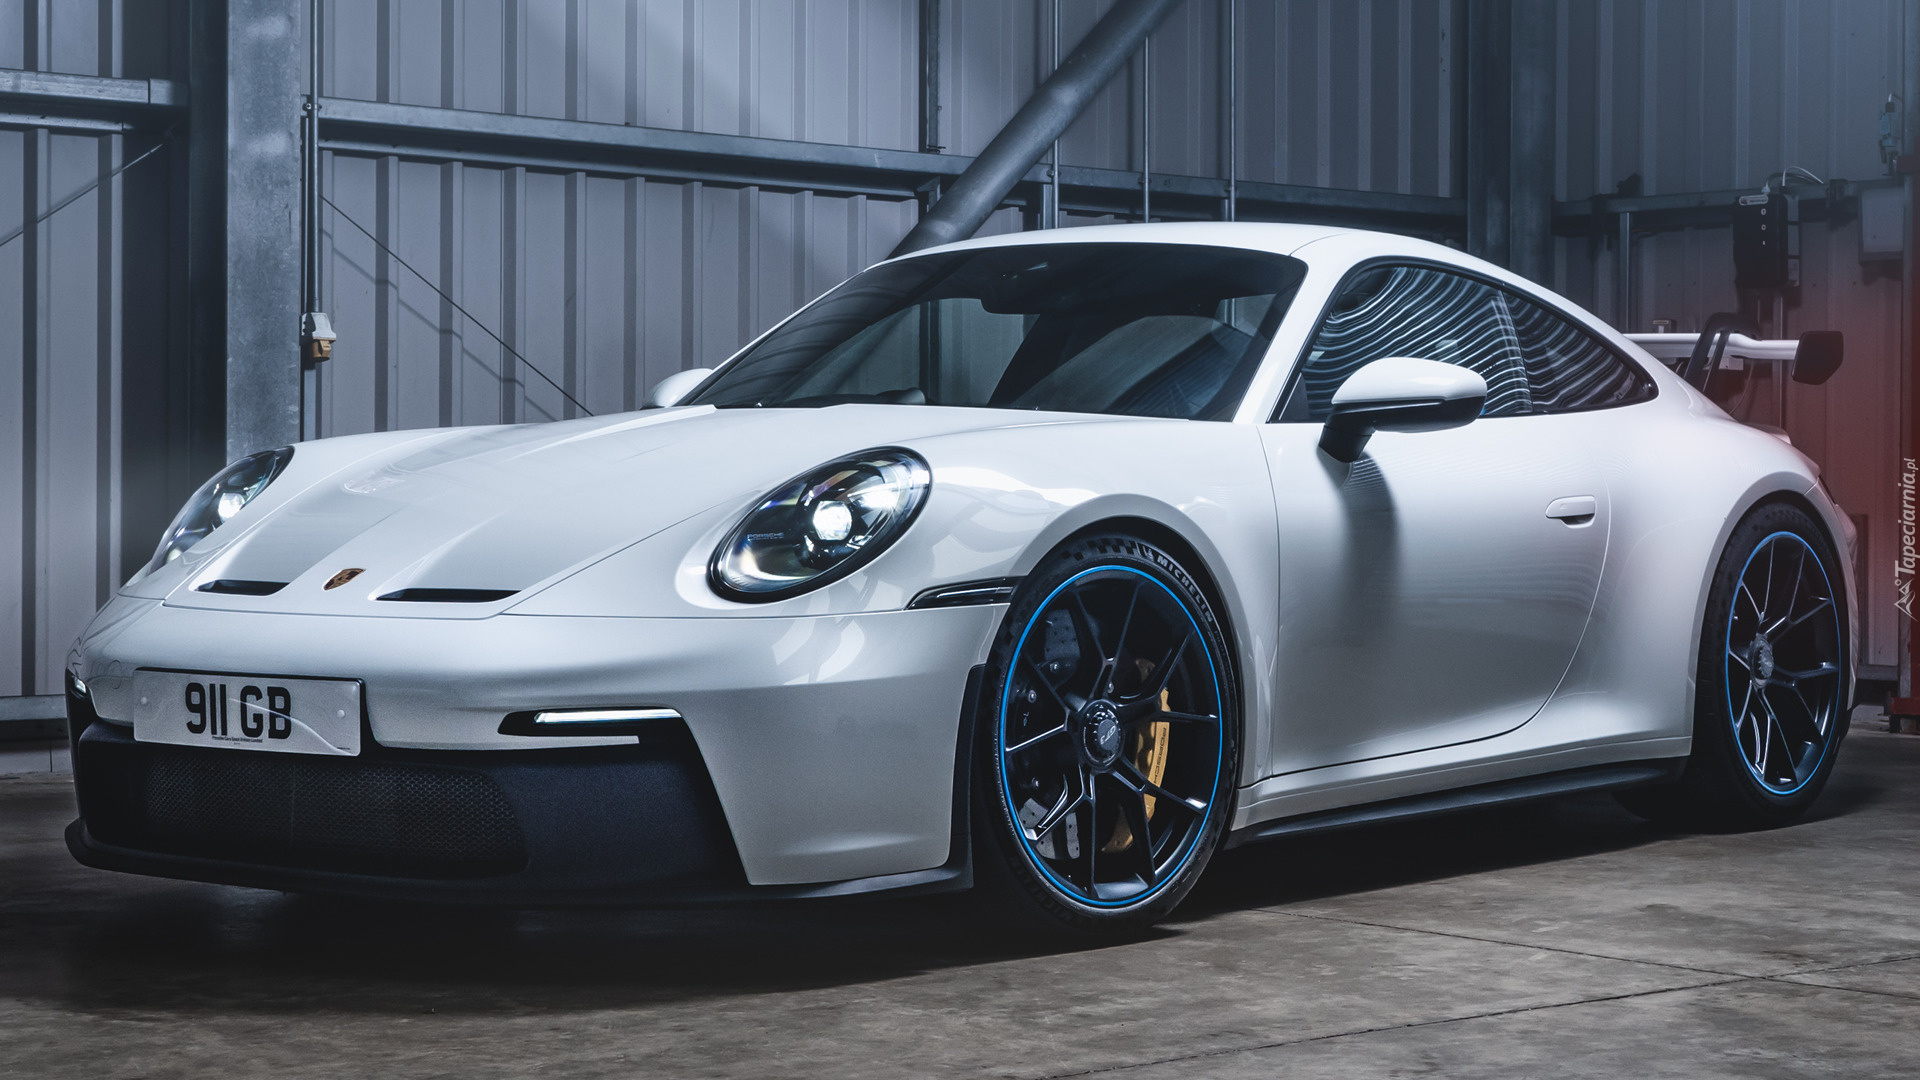 Białe, Porsche 911 GT3, Przód